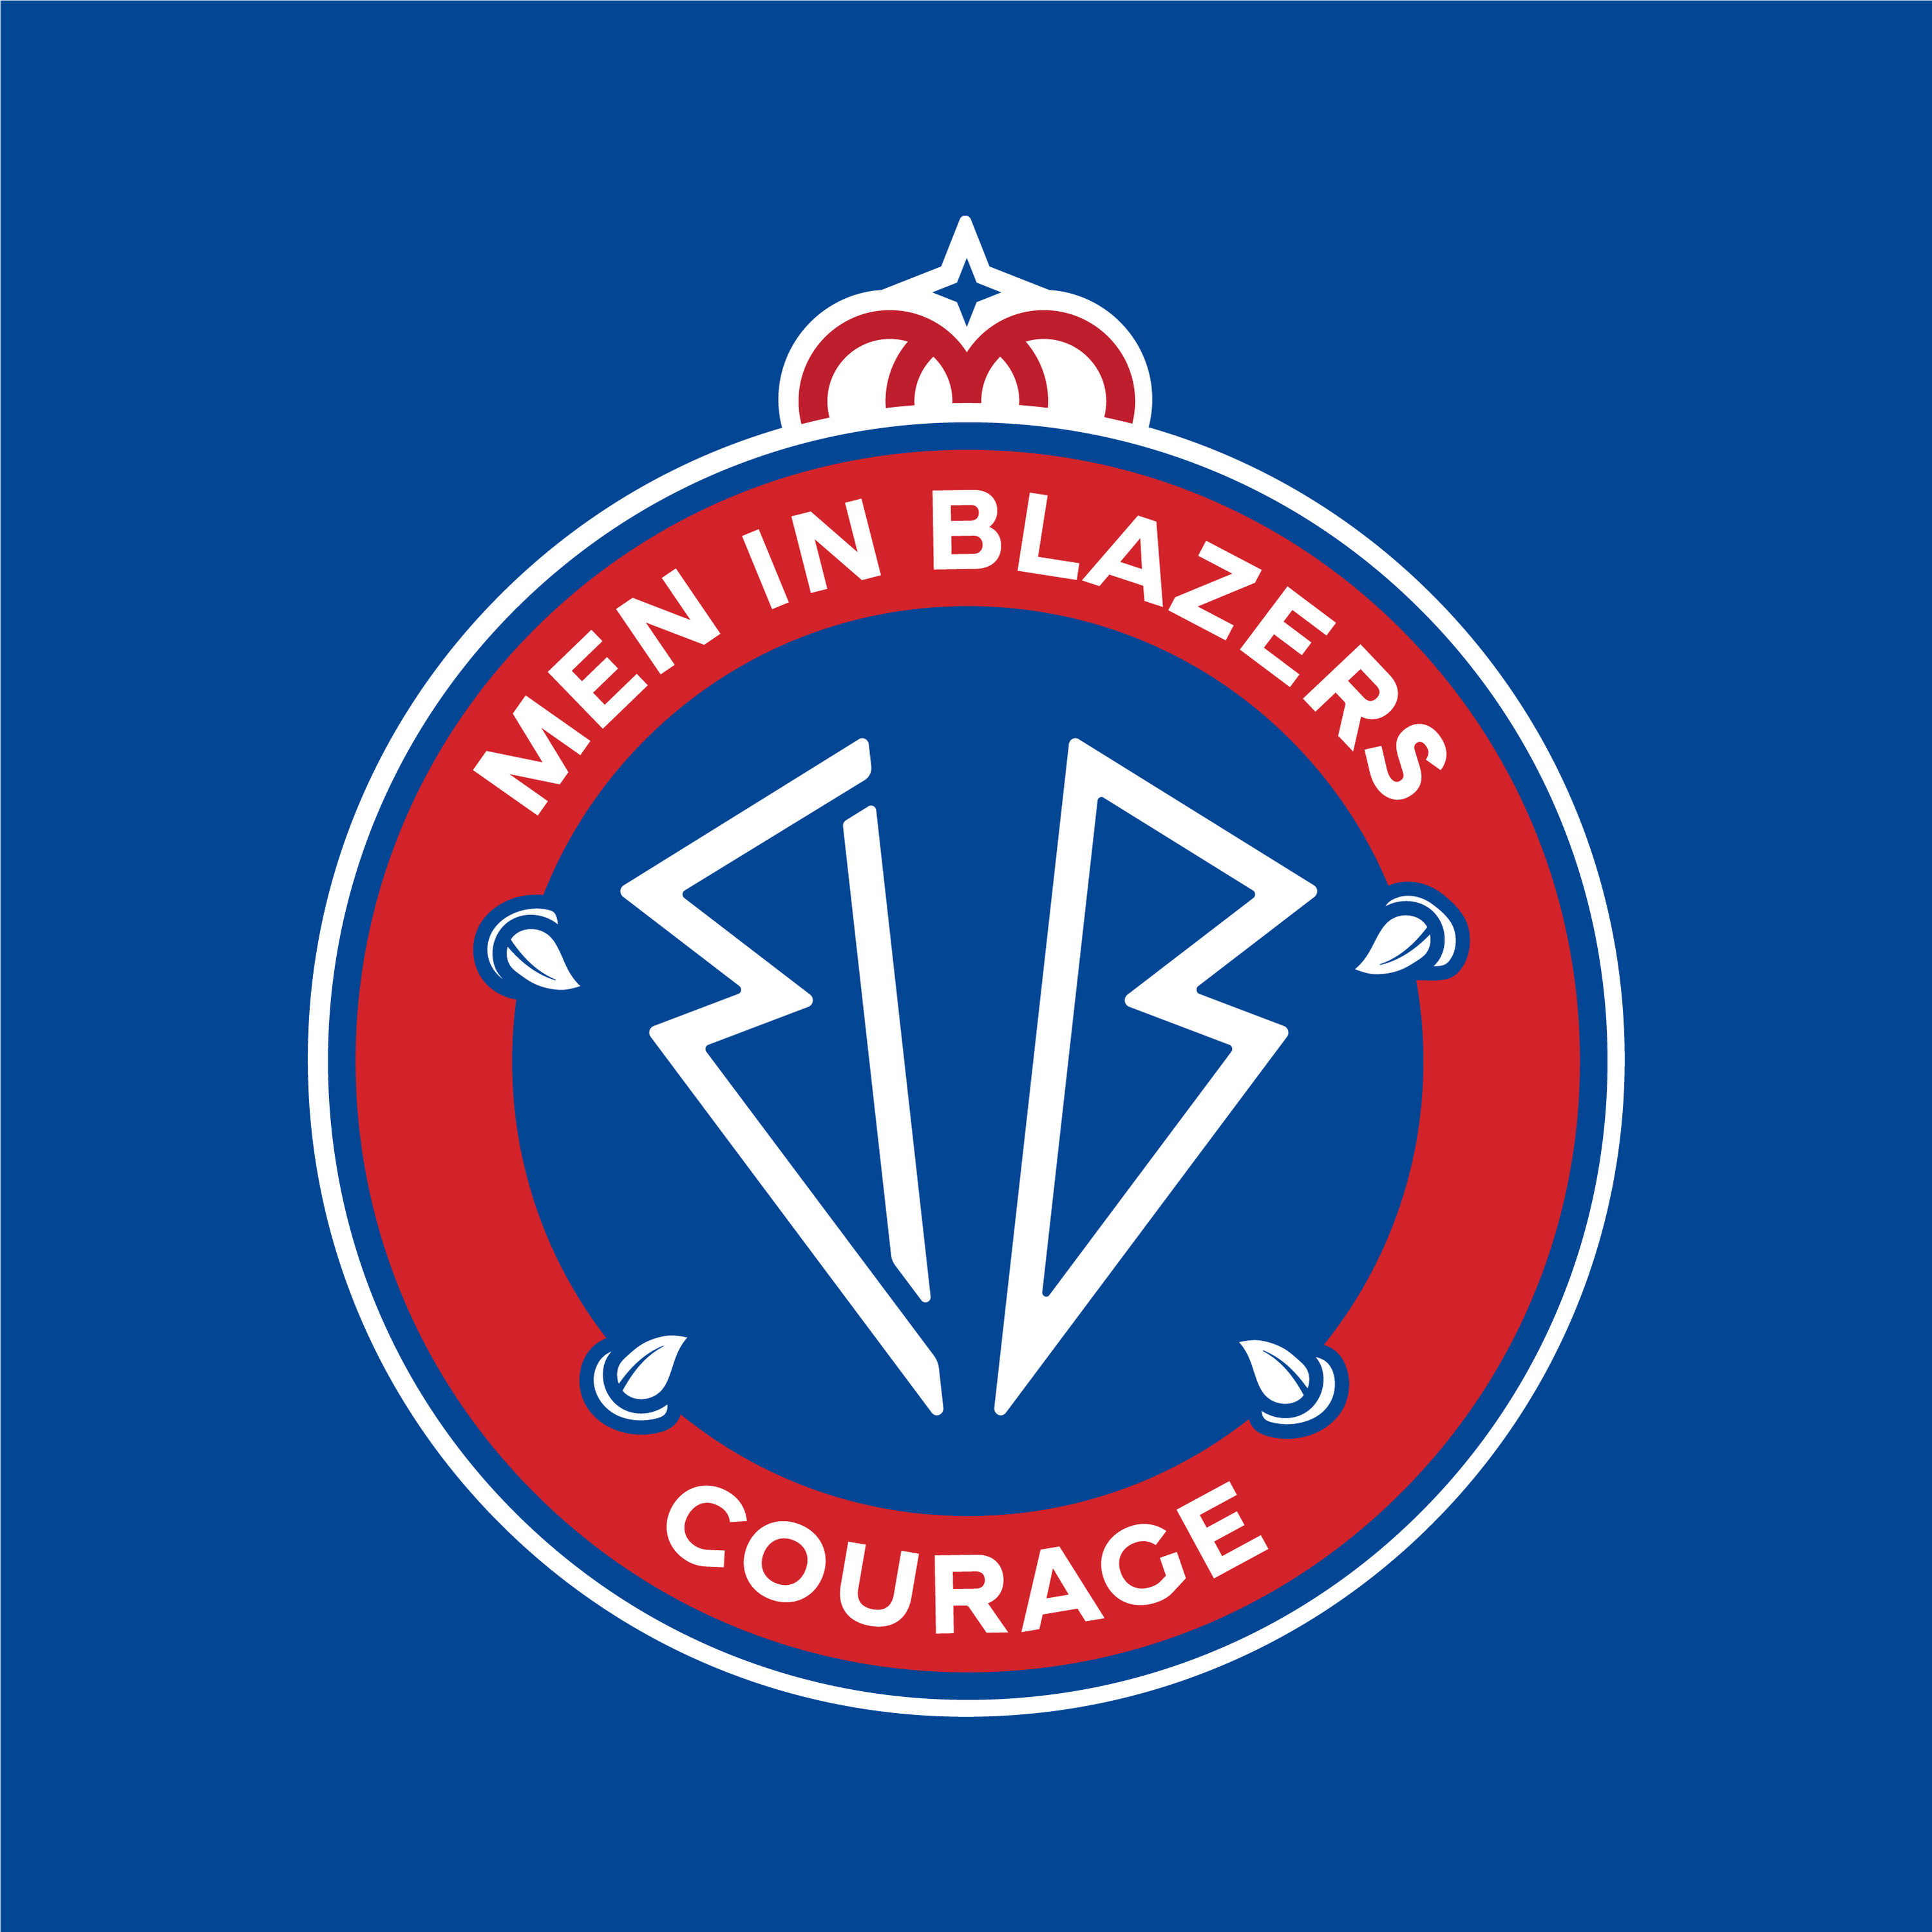 Men in Blazers World Cup Preview, Presented by Camarena Tequlia: Episode 1